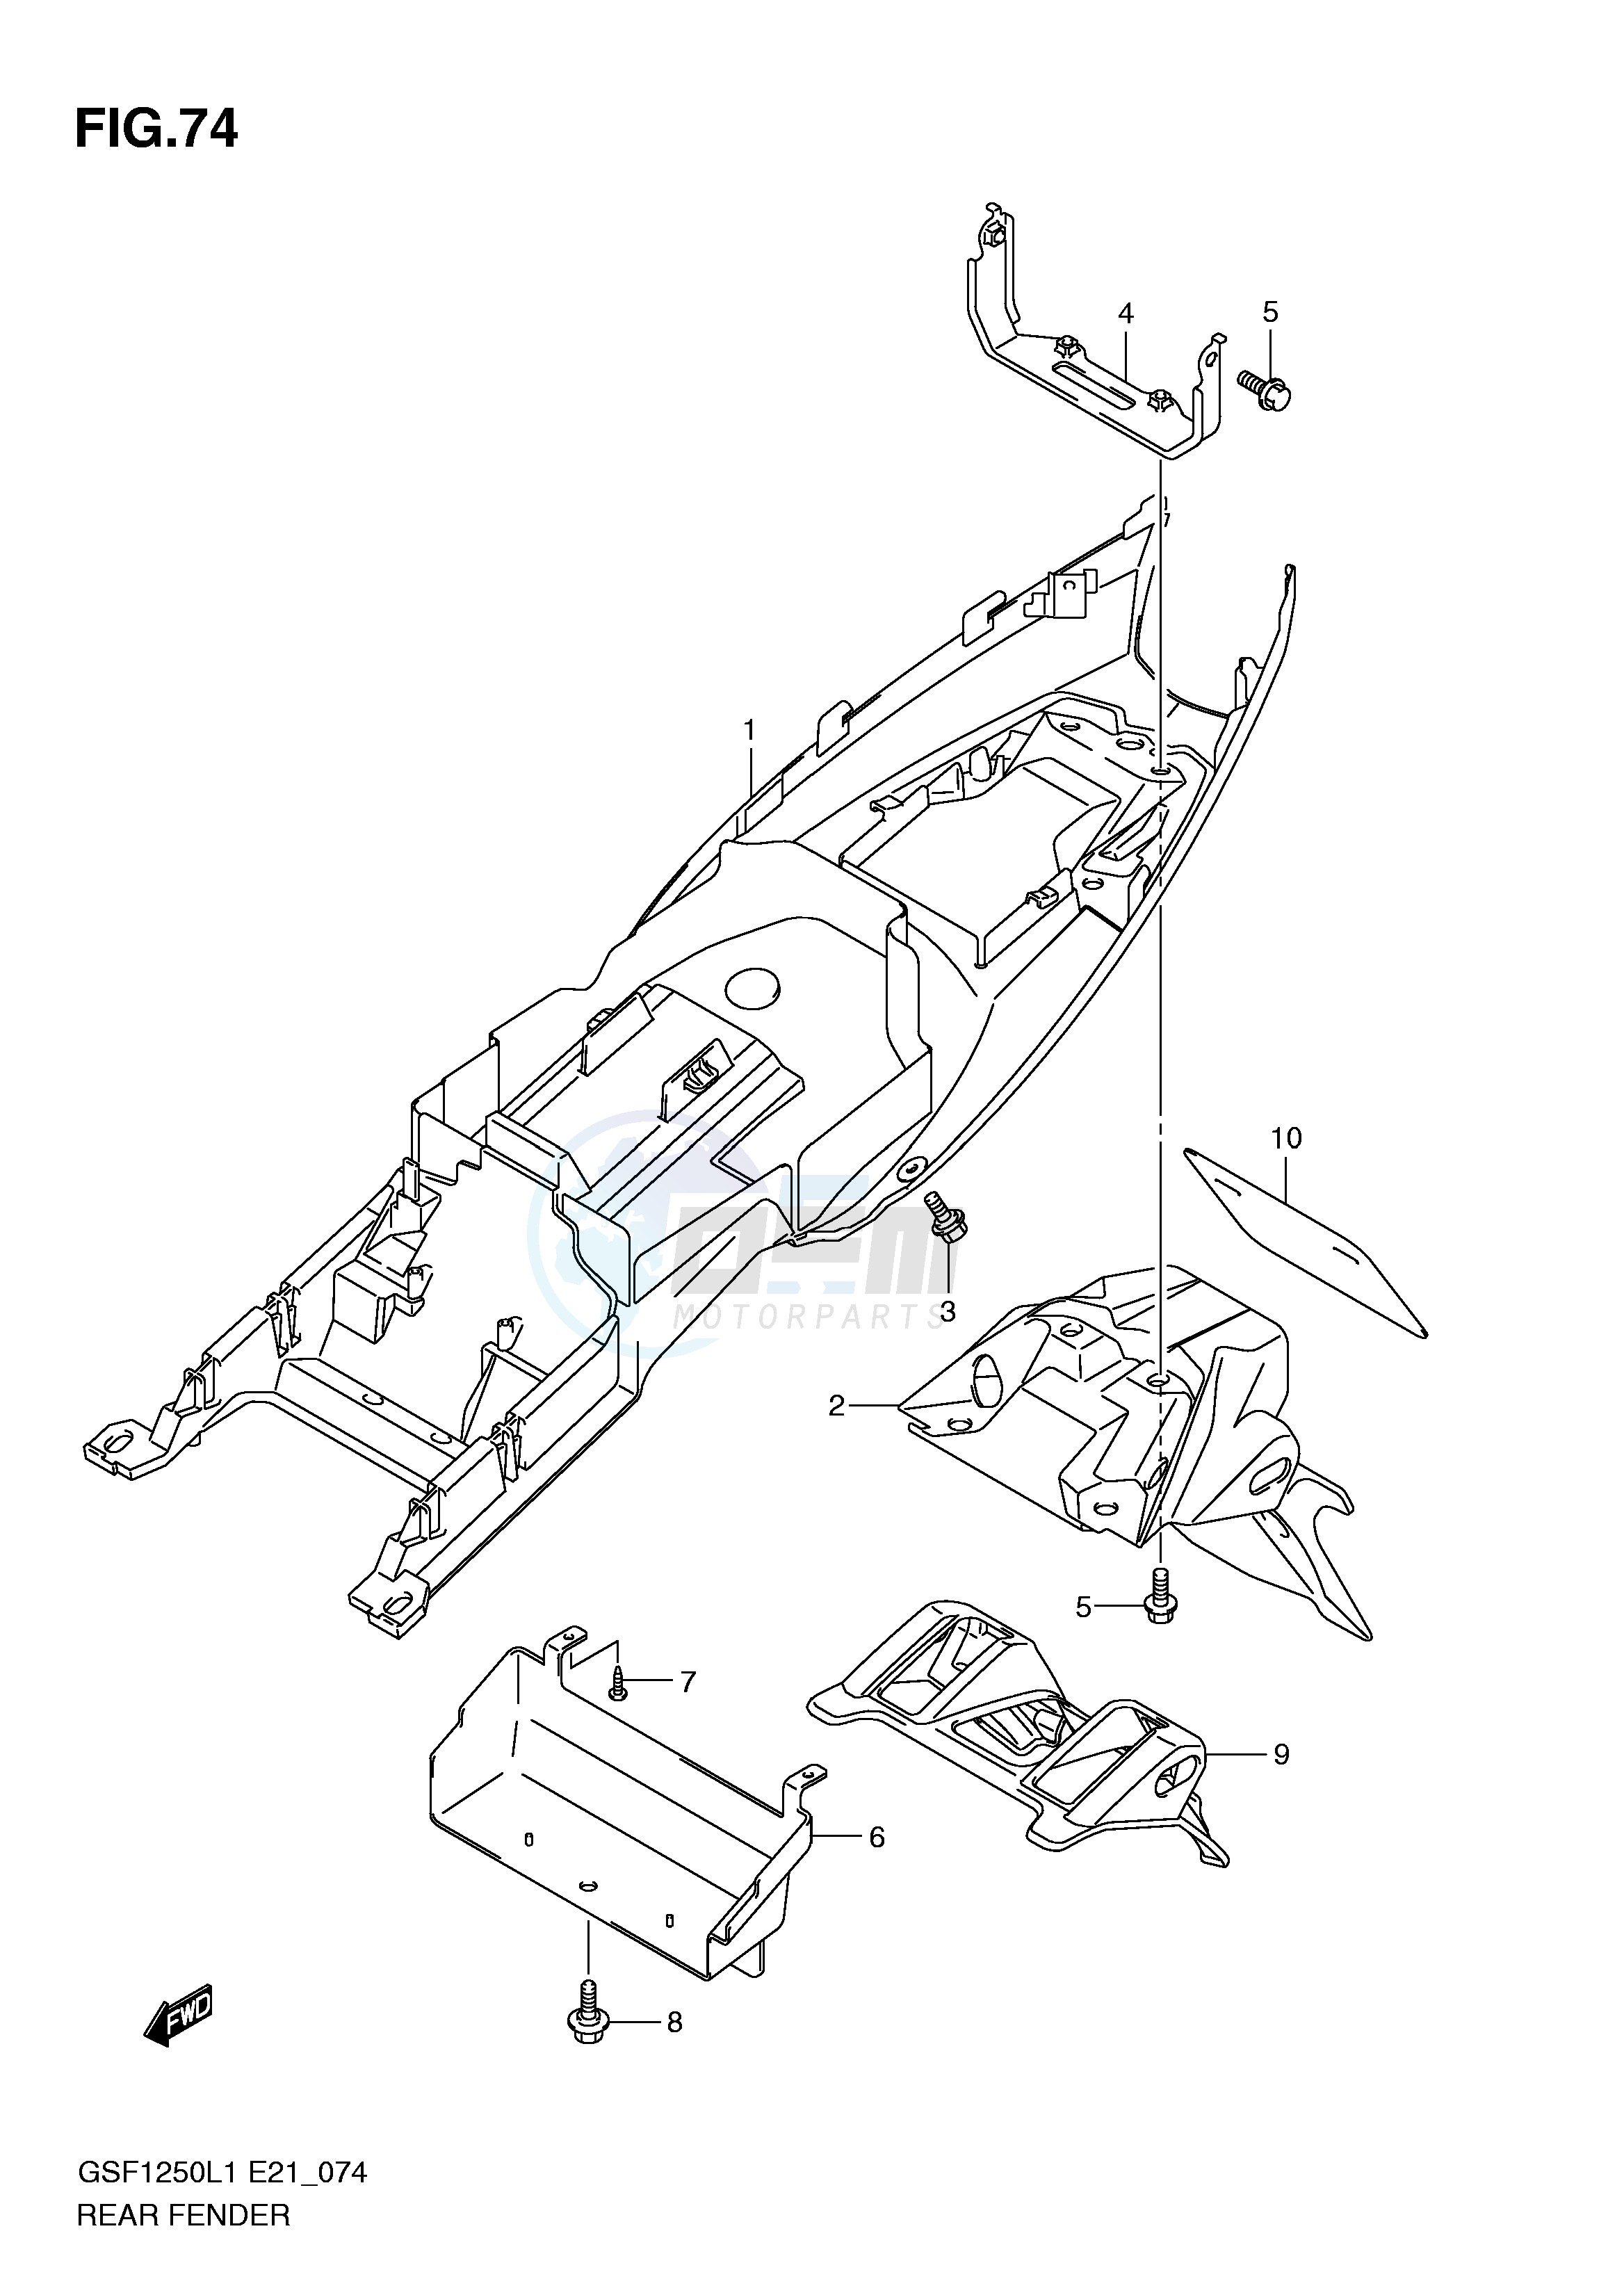 REAR FENDER (GSF1250AL1 E24) blueprint